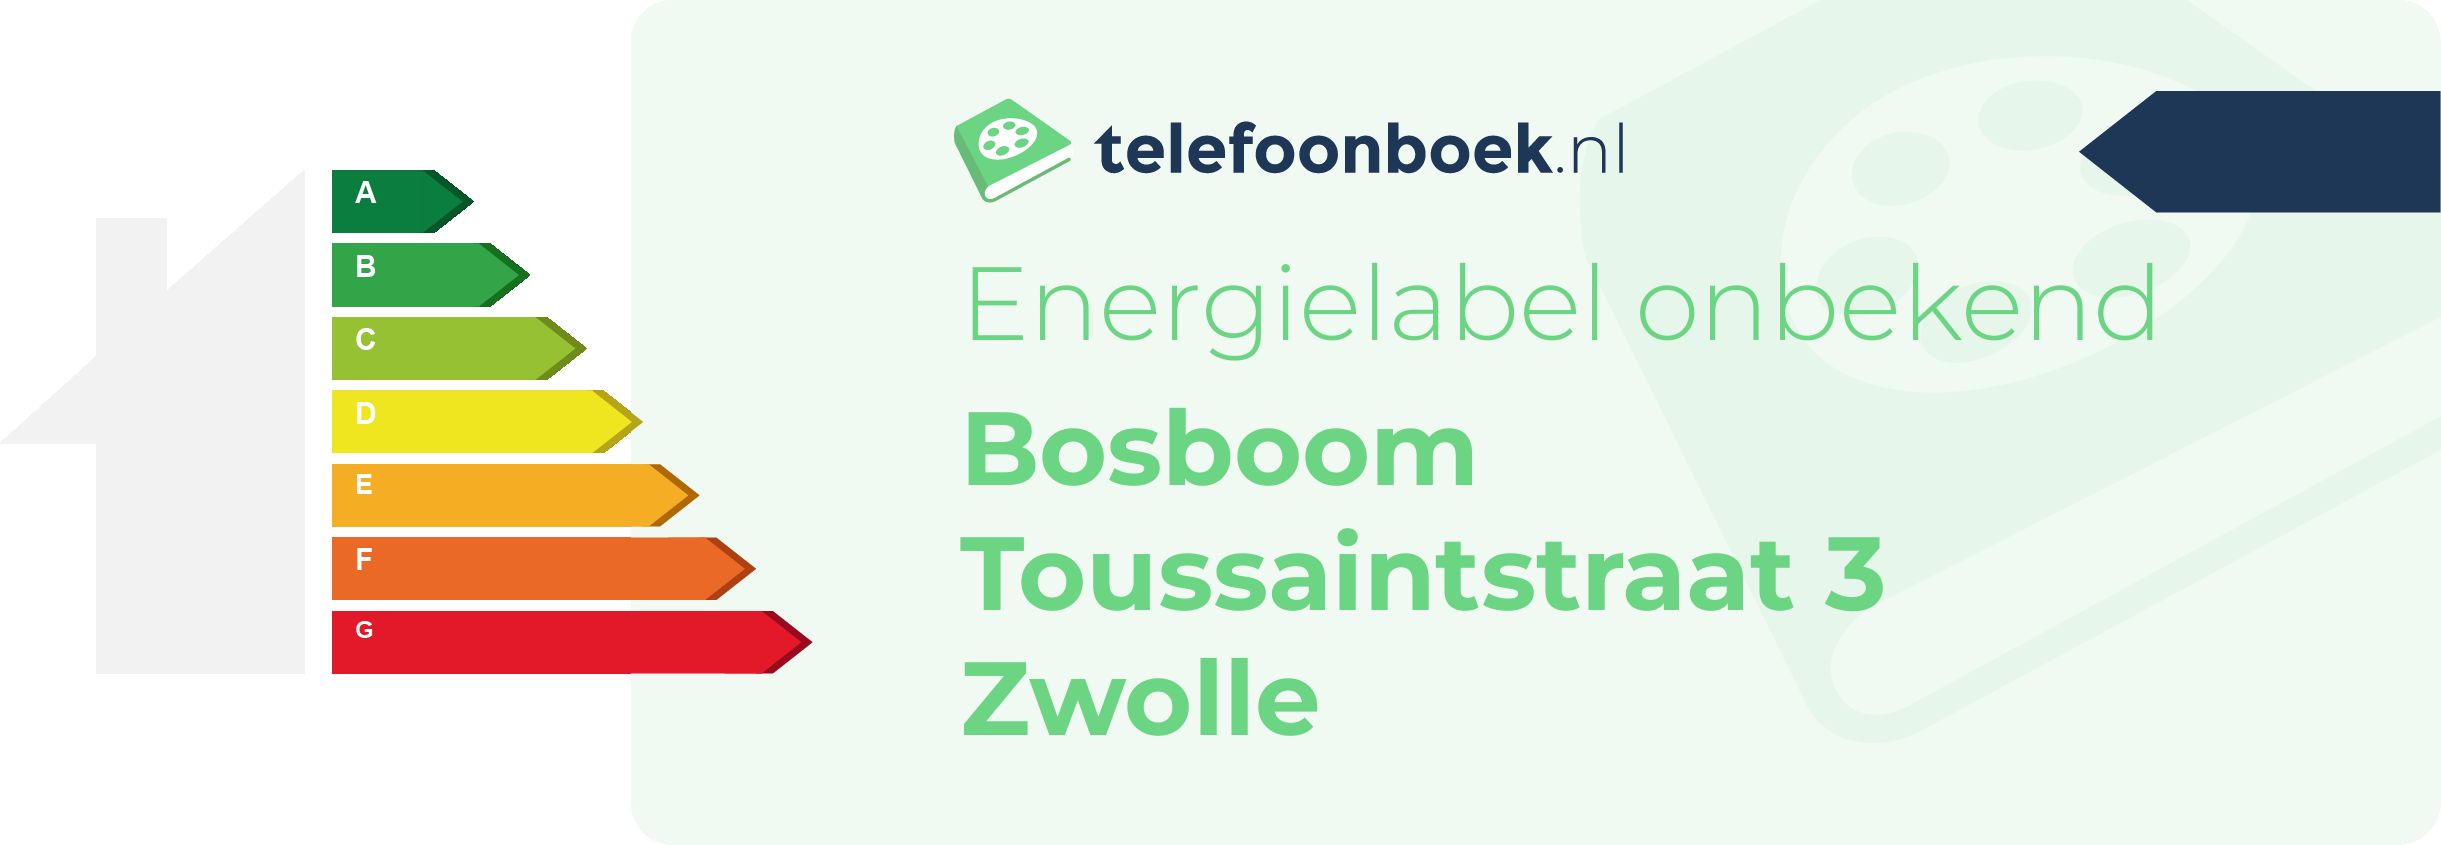 Energielabel Bosboom Toussaintstraat 3 Zwolle